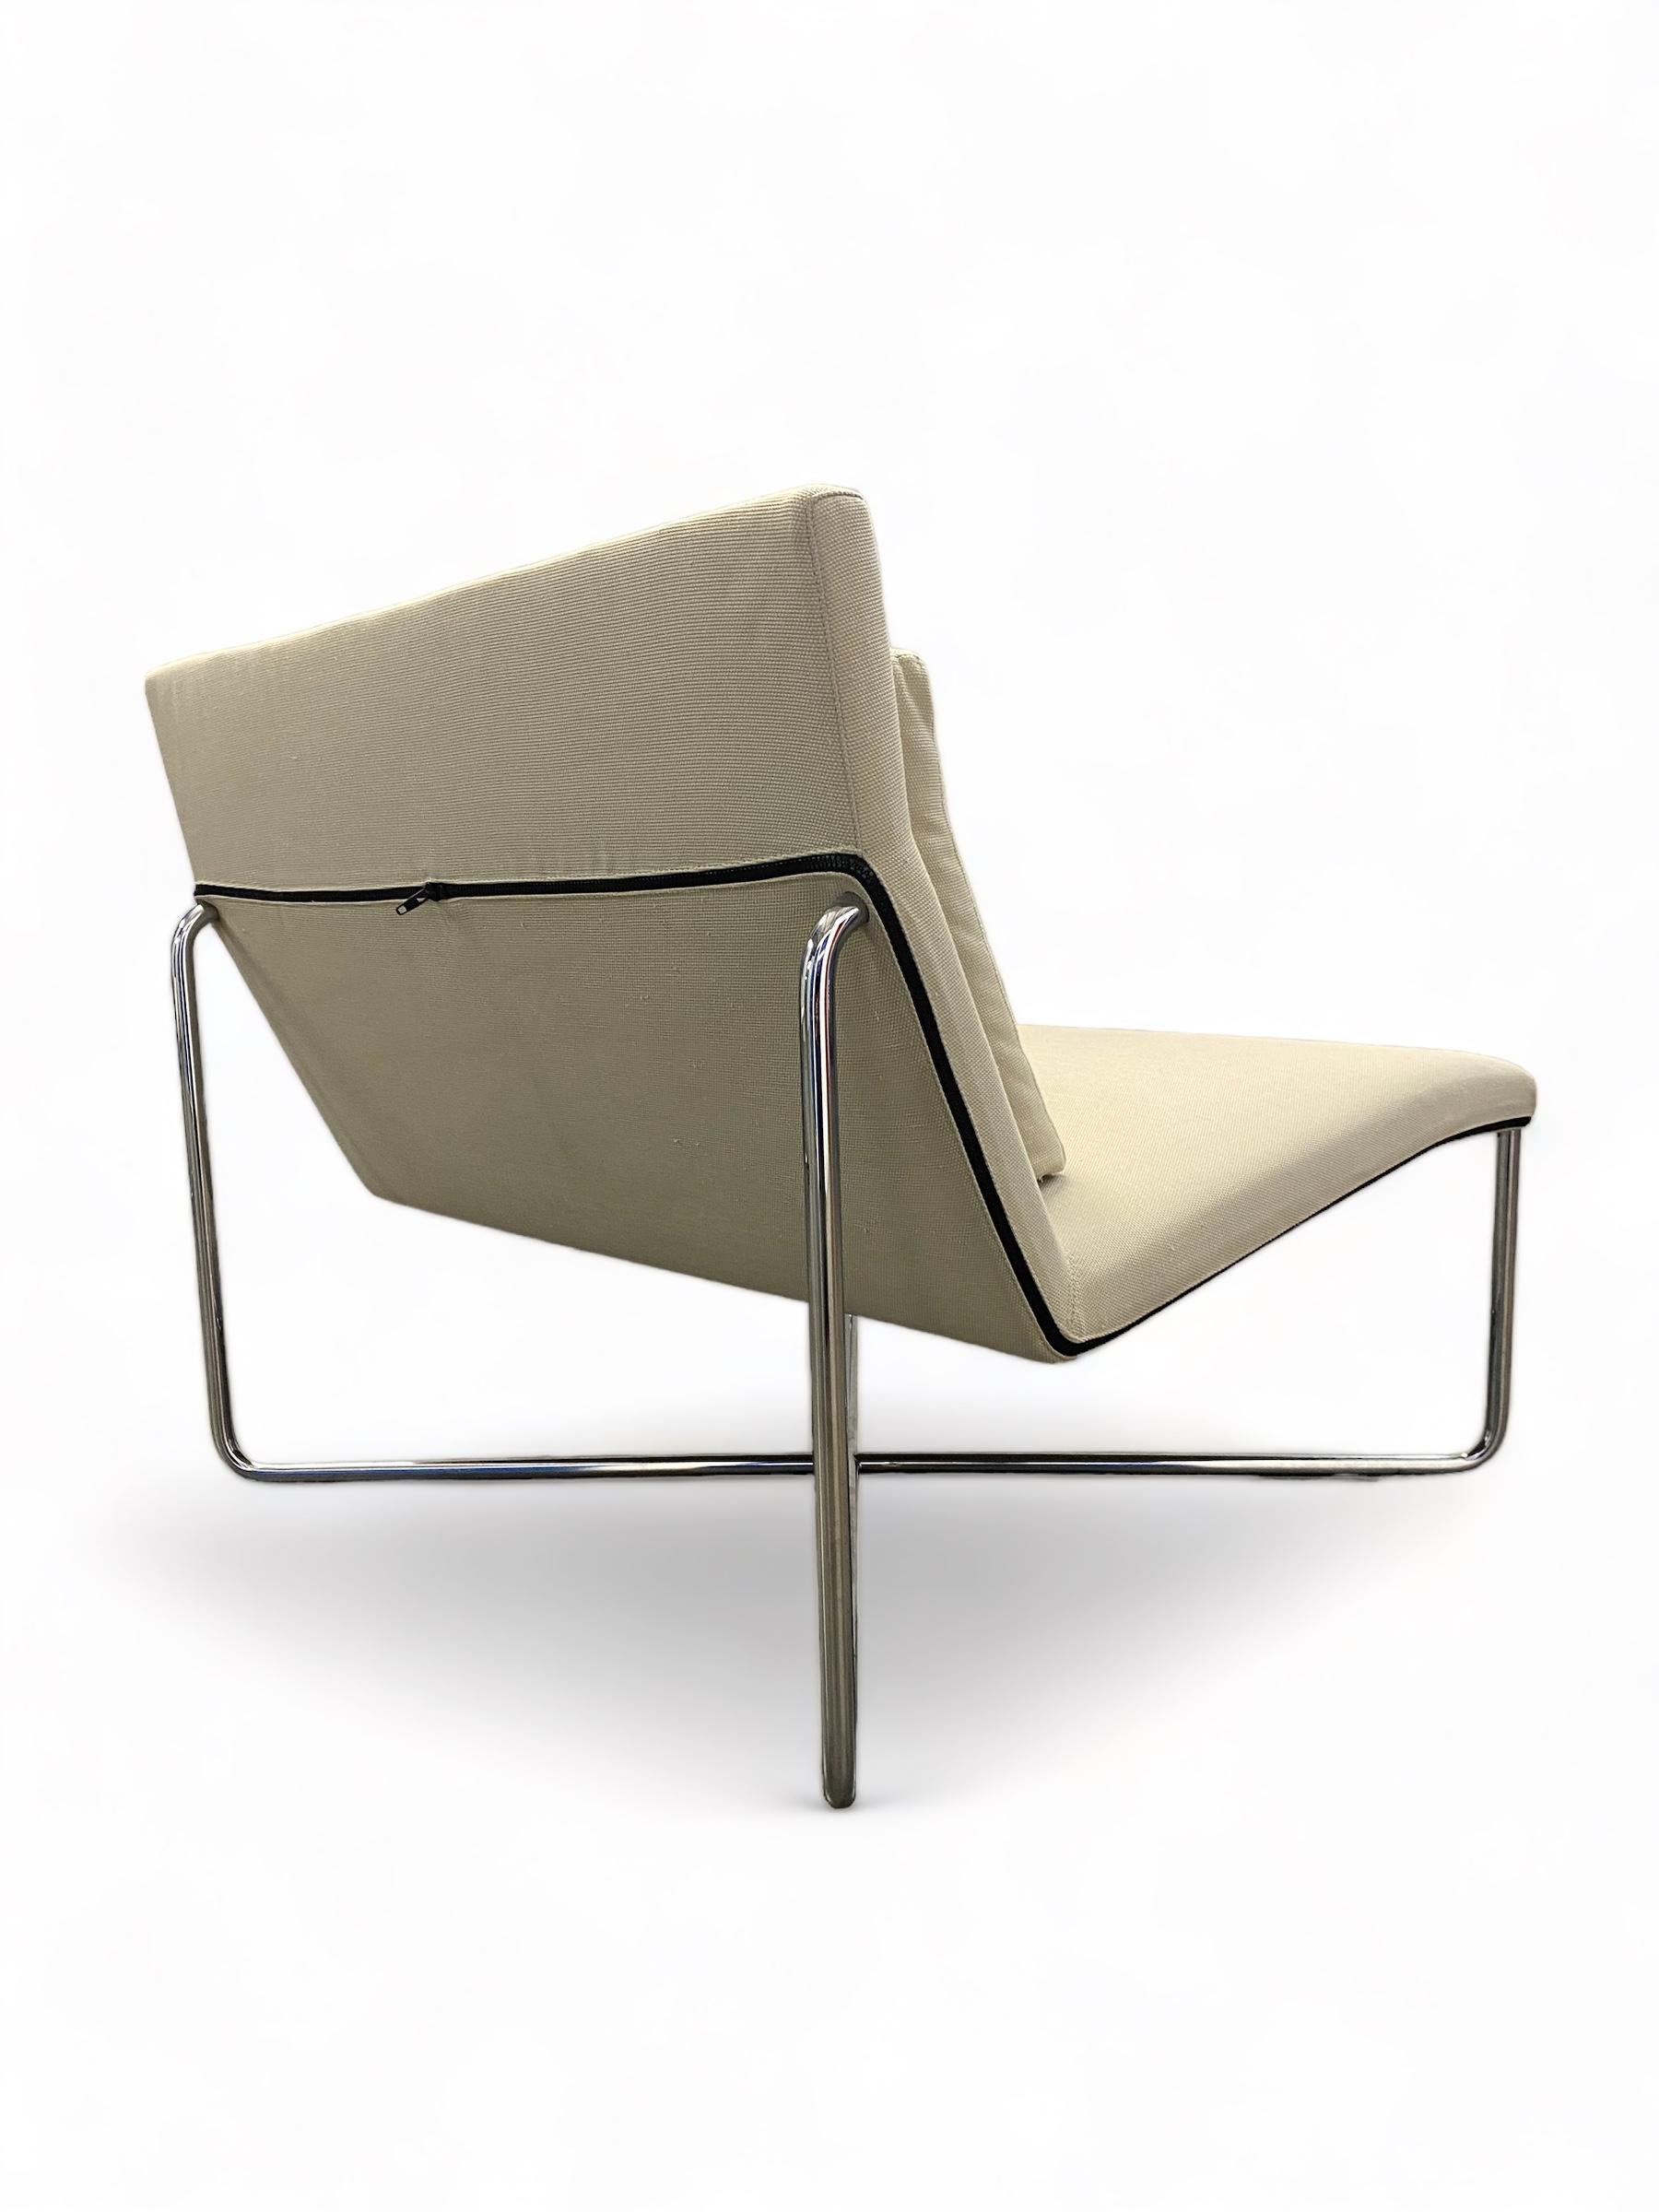 White Diller chair designed by Rodolfo Dordoni for Minotti, Italy. 2